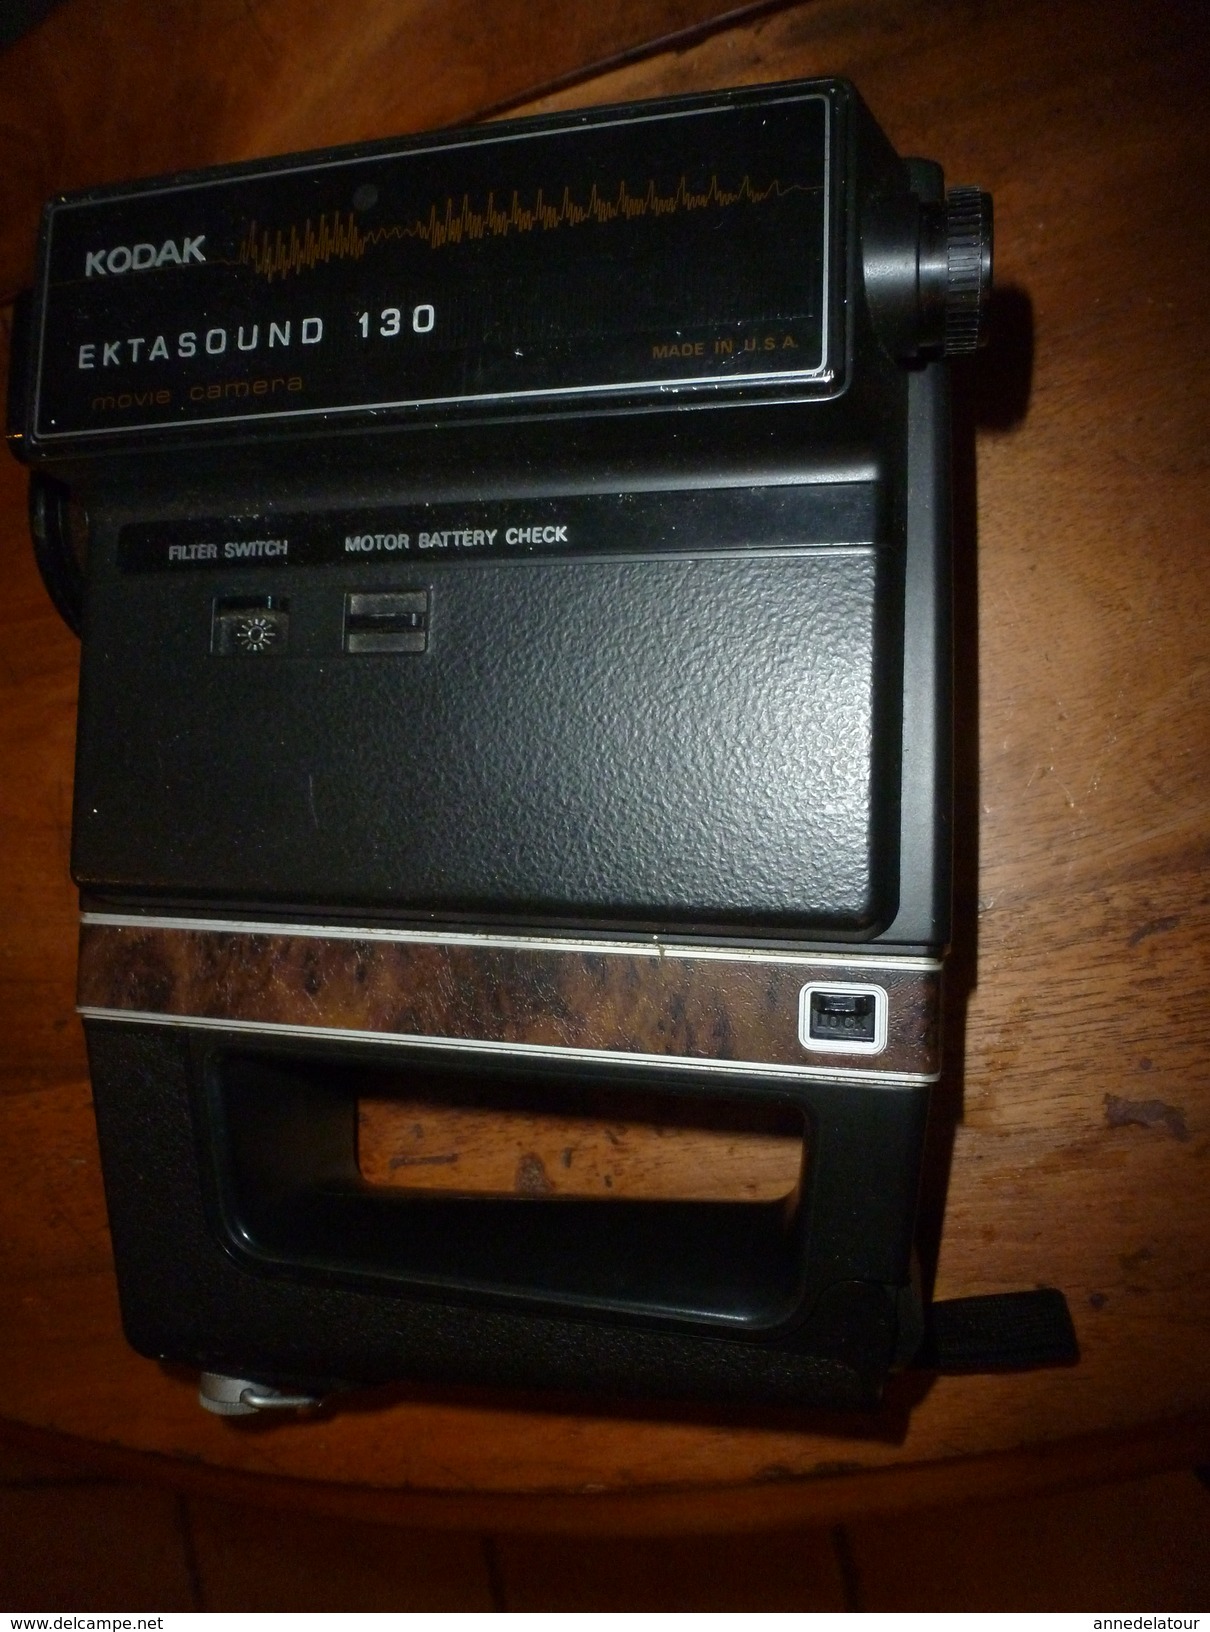 KODAK EKTASOUND 130 Movie Caméra :  Avec Notice Et Boite D'origine  (année De Fabrication Probable, Vers 1973) - Camcorder